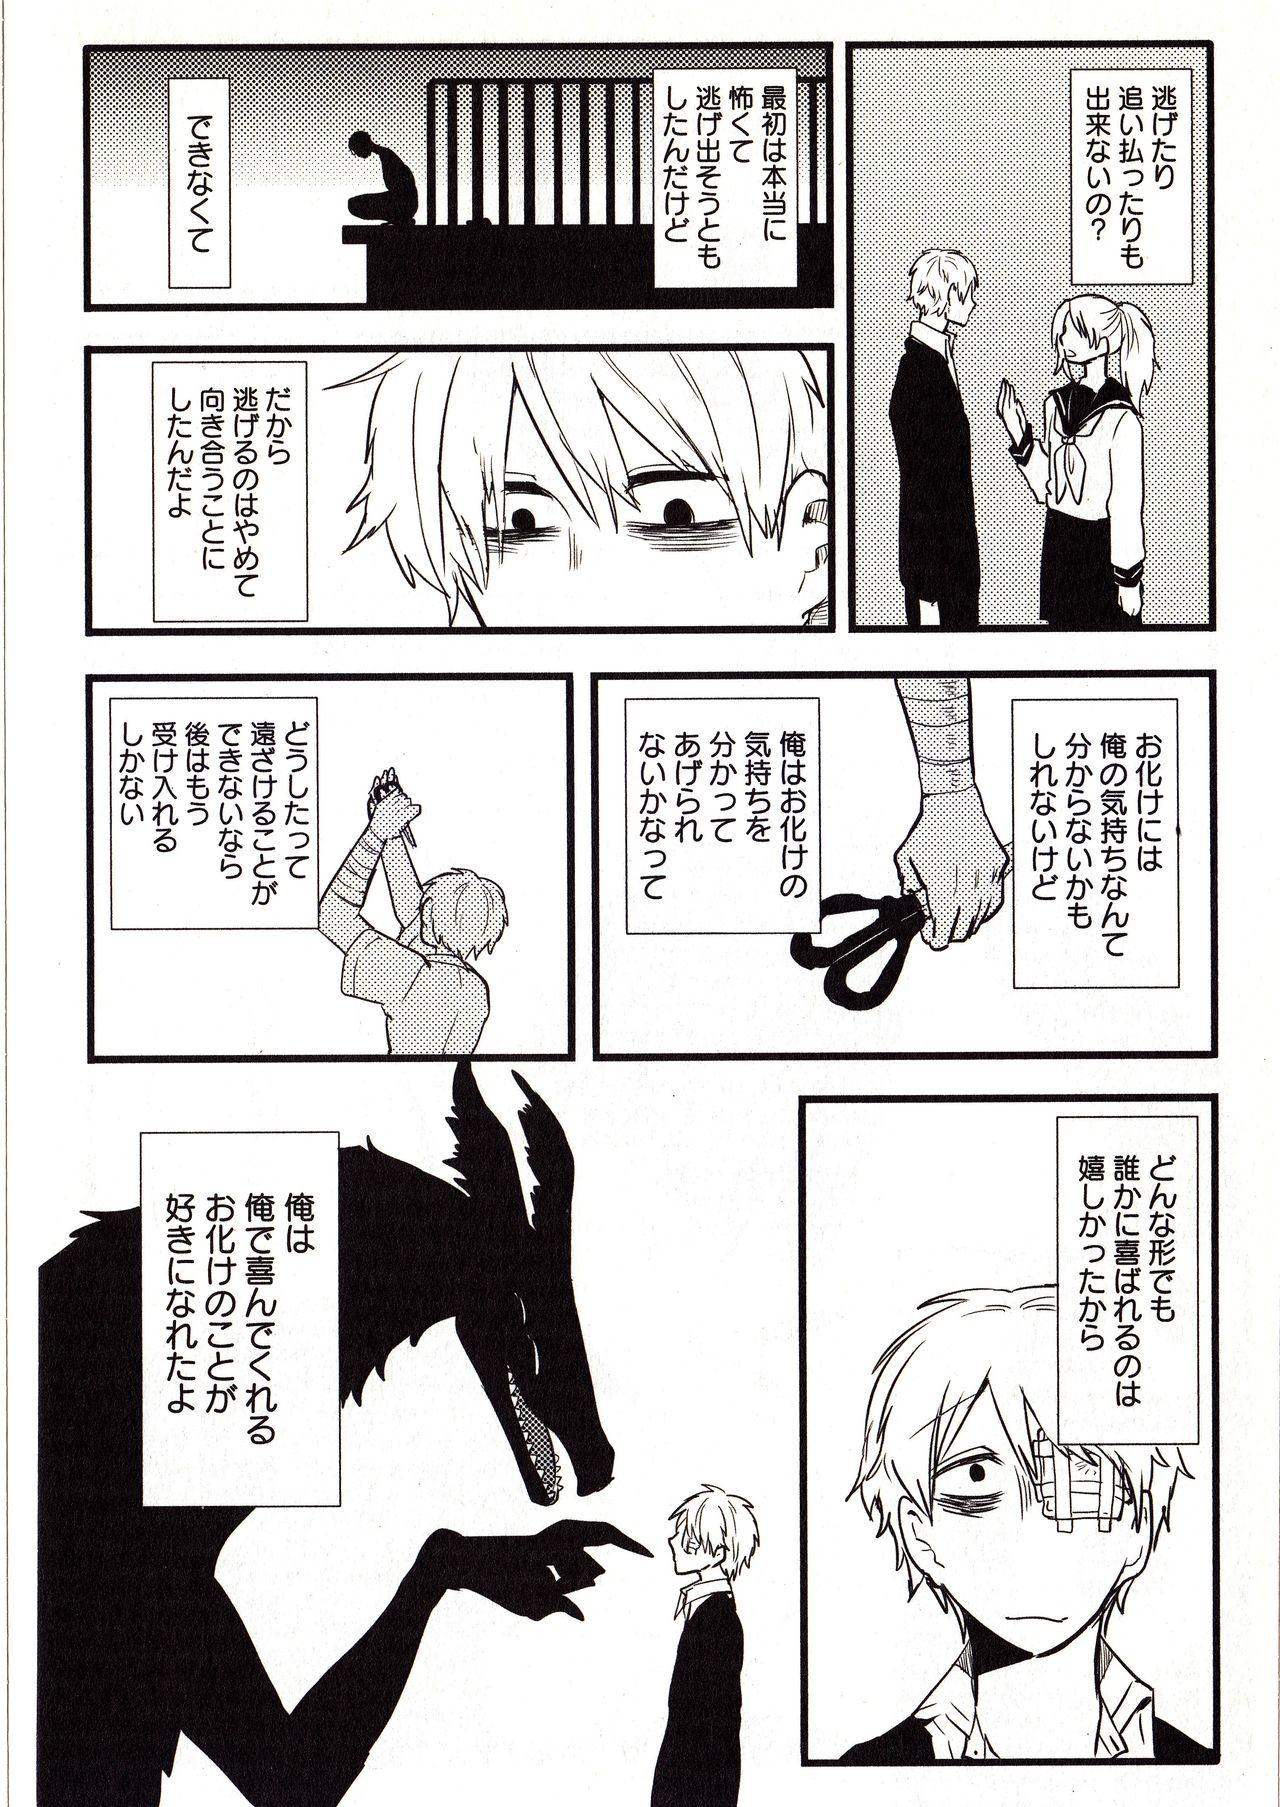 Camshow Sanzo manga Scene - Page 12